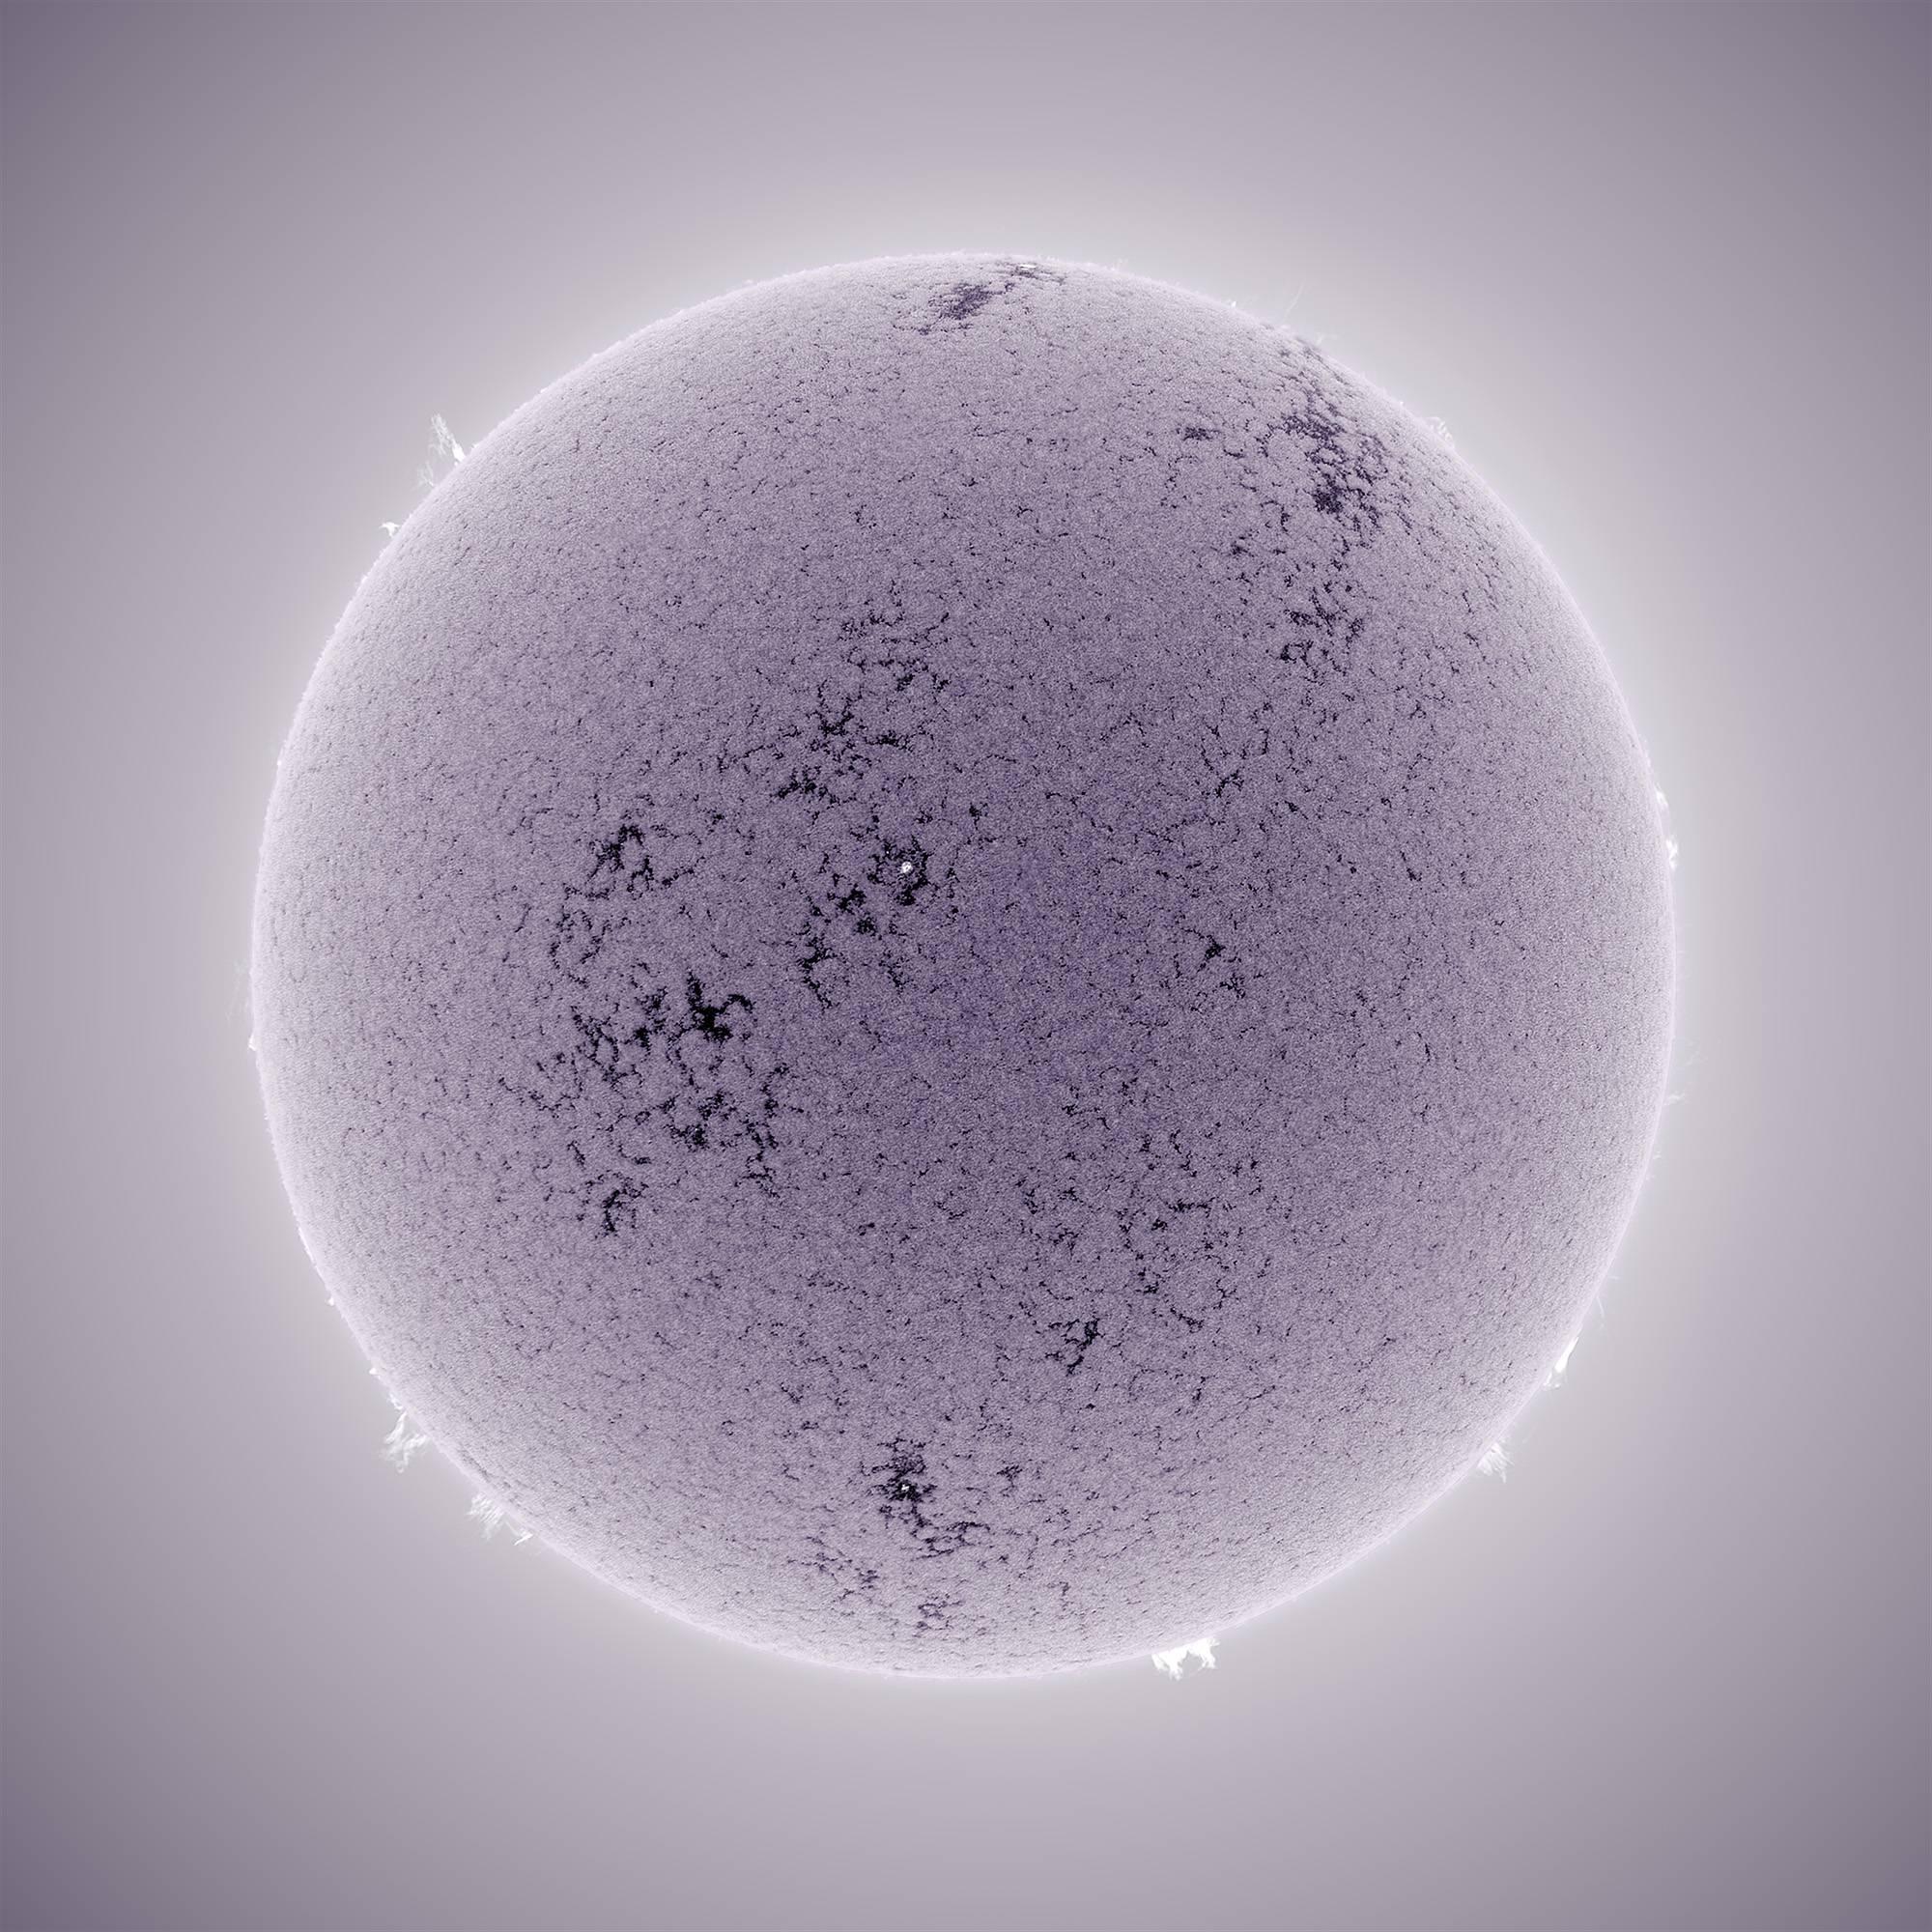 2013 May 31 – Ultraviolet - Photograph by Alan Friedman